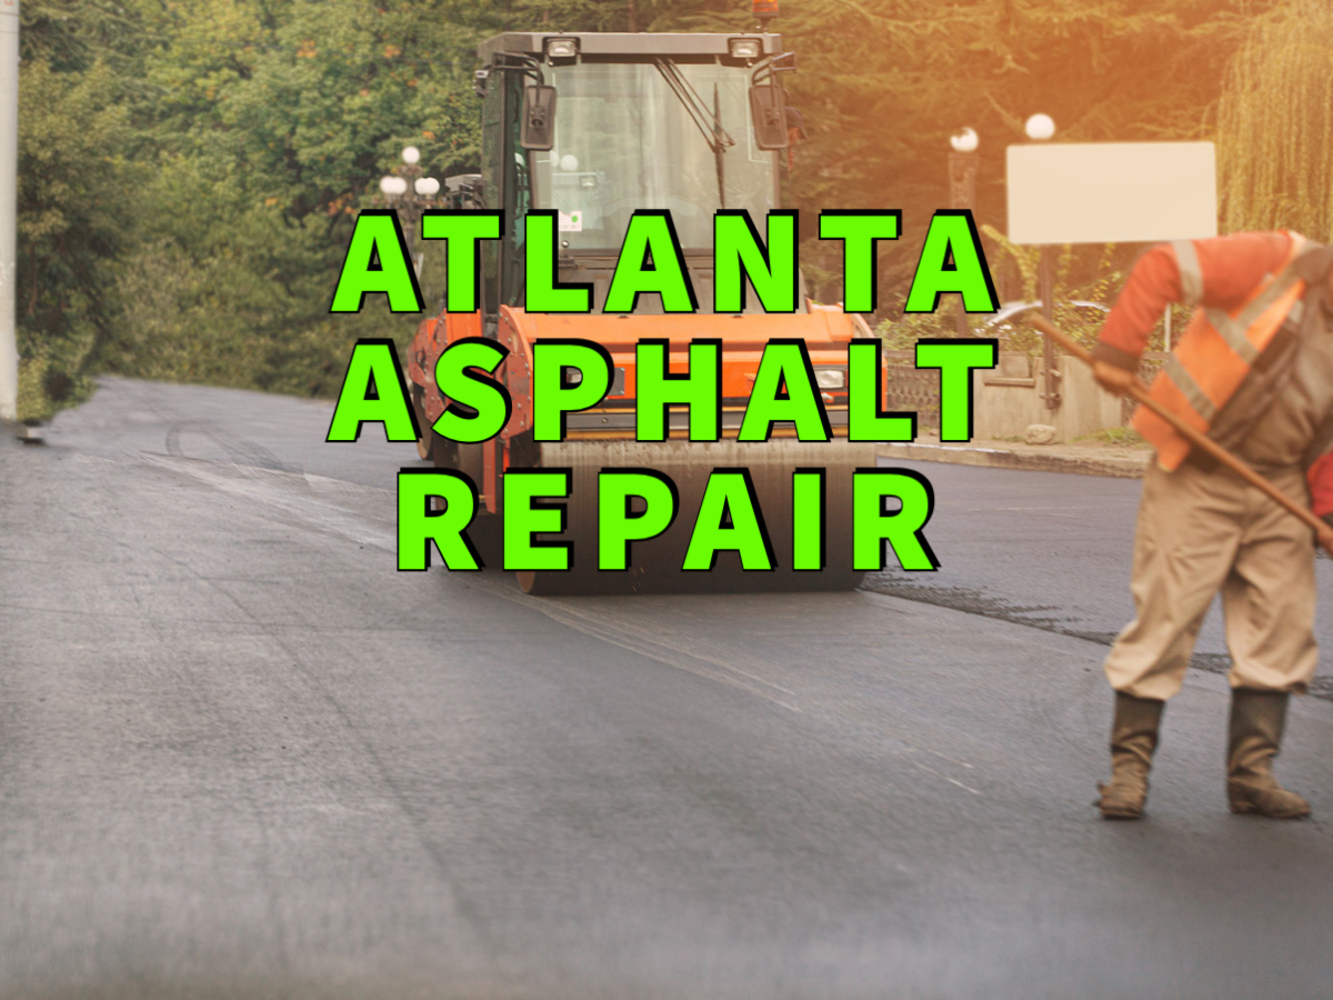 Atlanta asphalt repair written in green over worker and asphalt roller laying new road